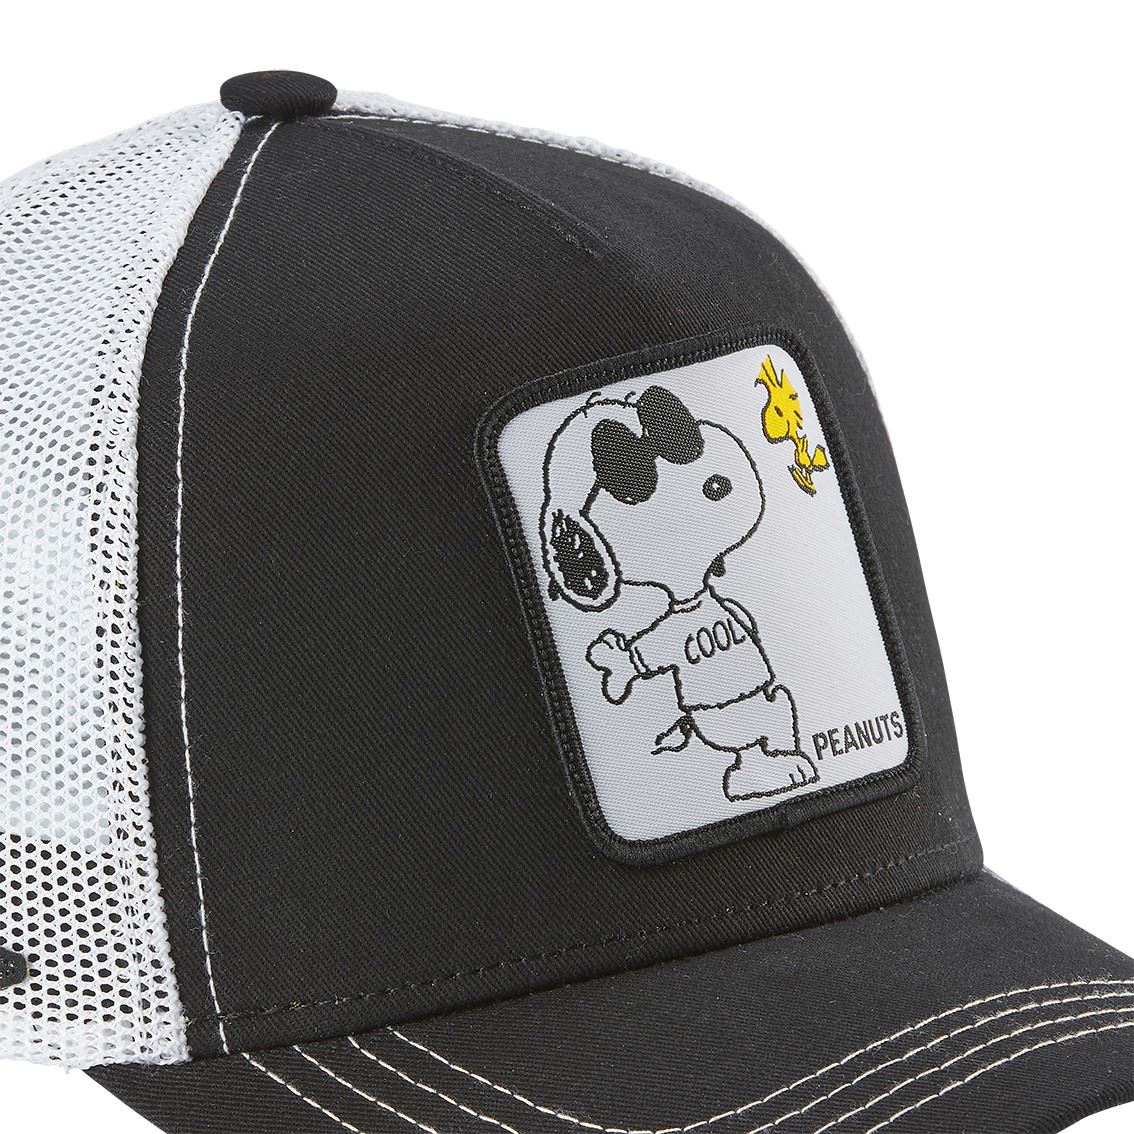 Snoopy Die Peanuts Schwarz Weiß Trucker Cap Capslab